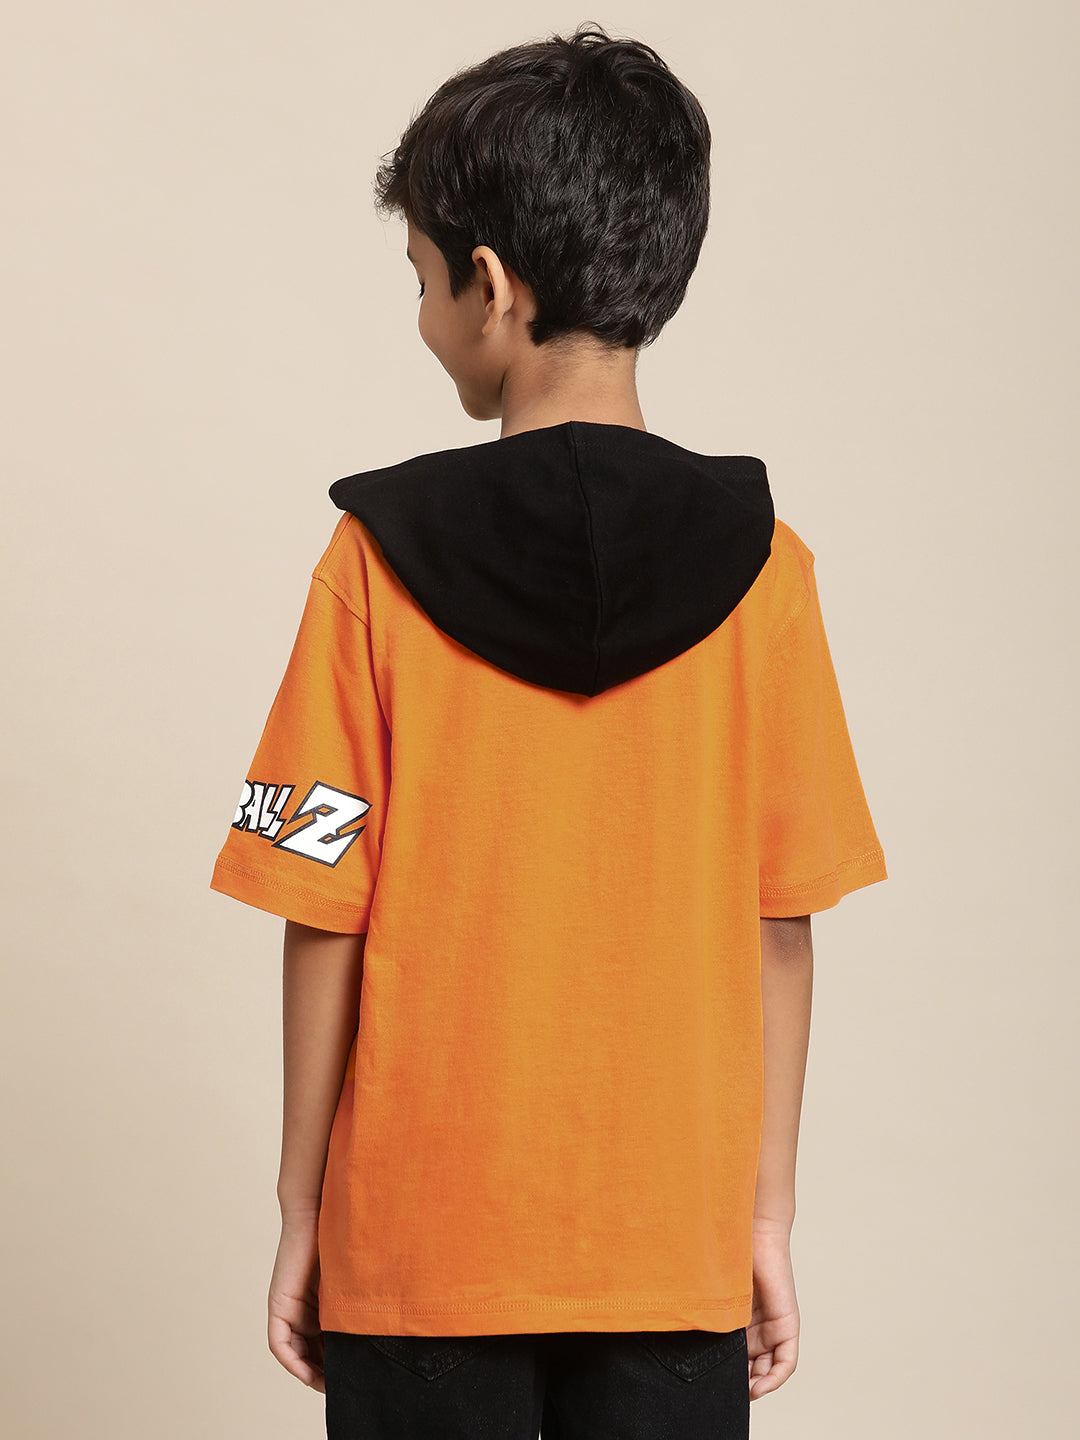 Kidsville Dragon Ball Z Printed Orange Tshirt For Boys